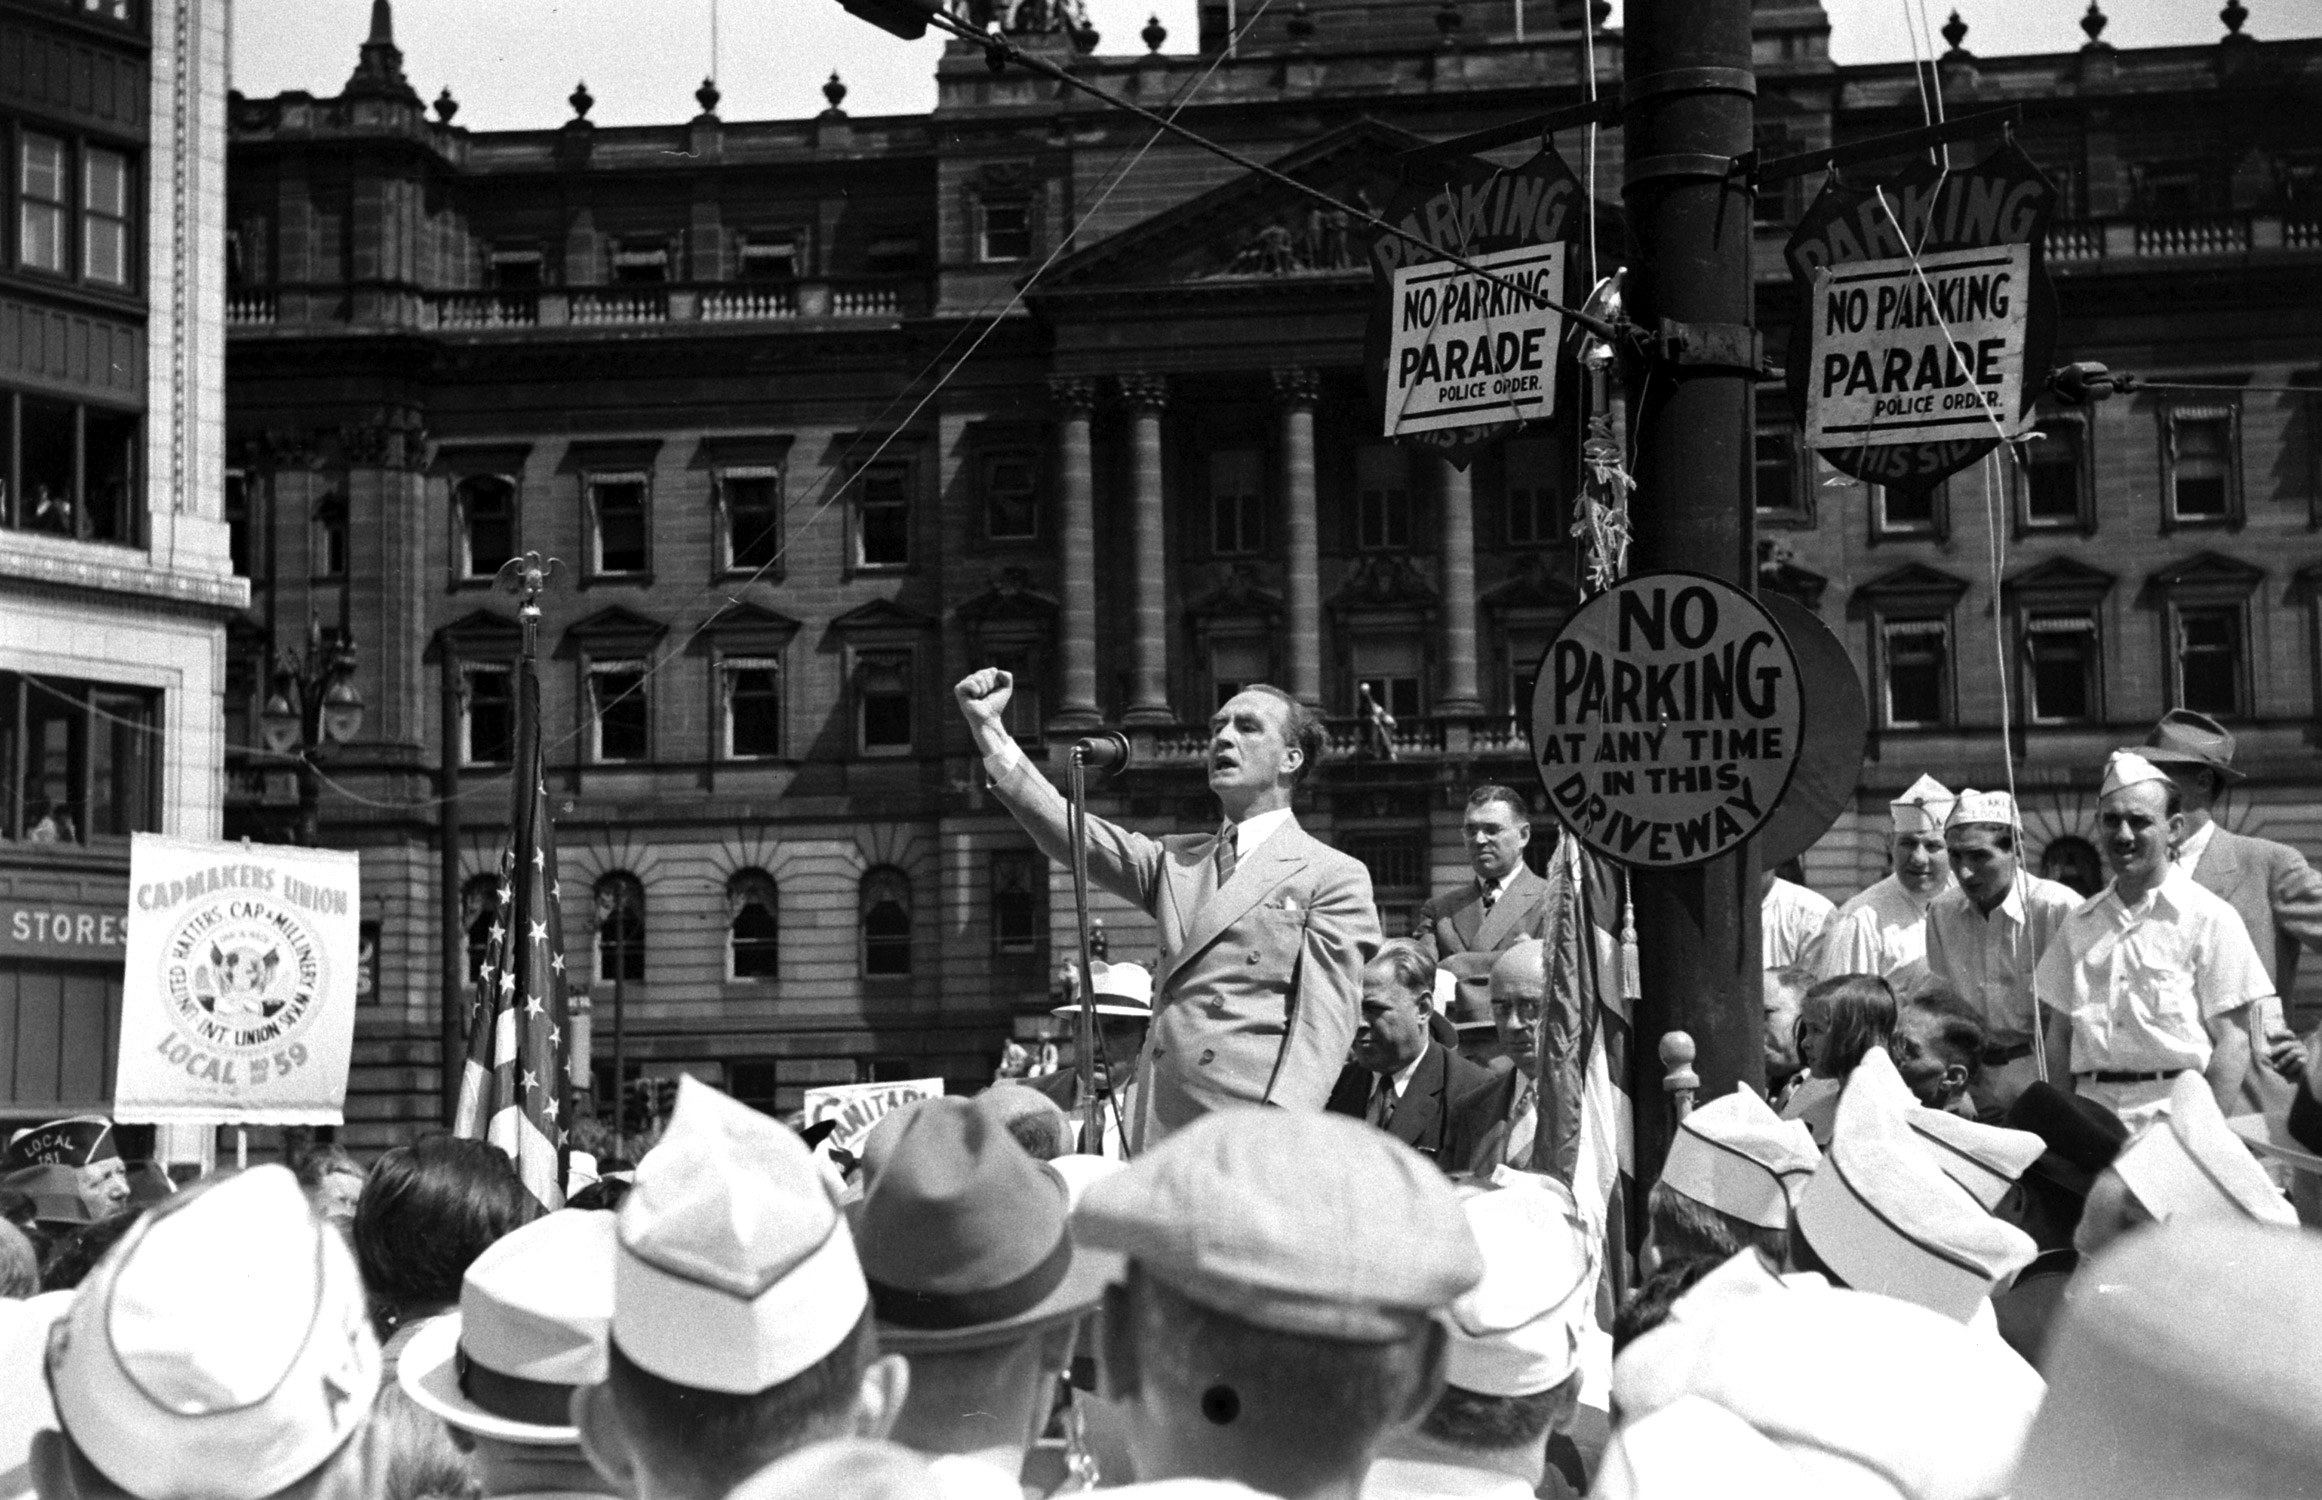 Detroit Labor Day Parade, 1938